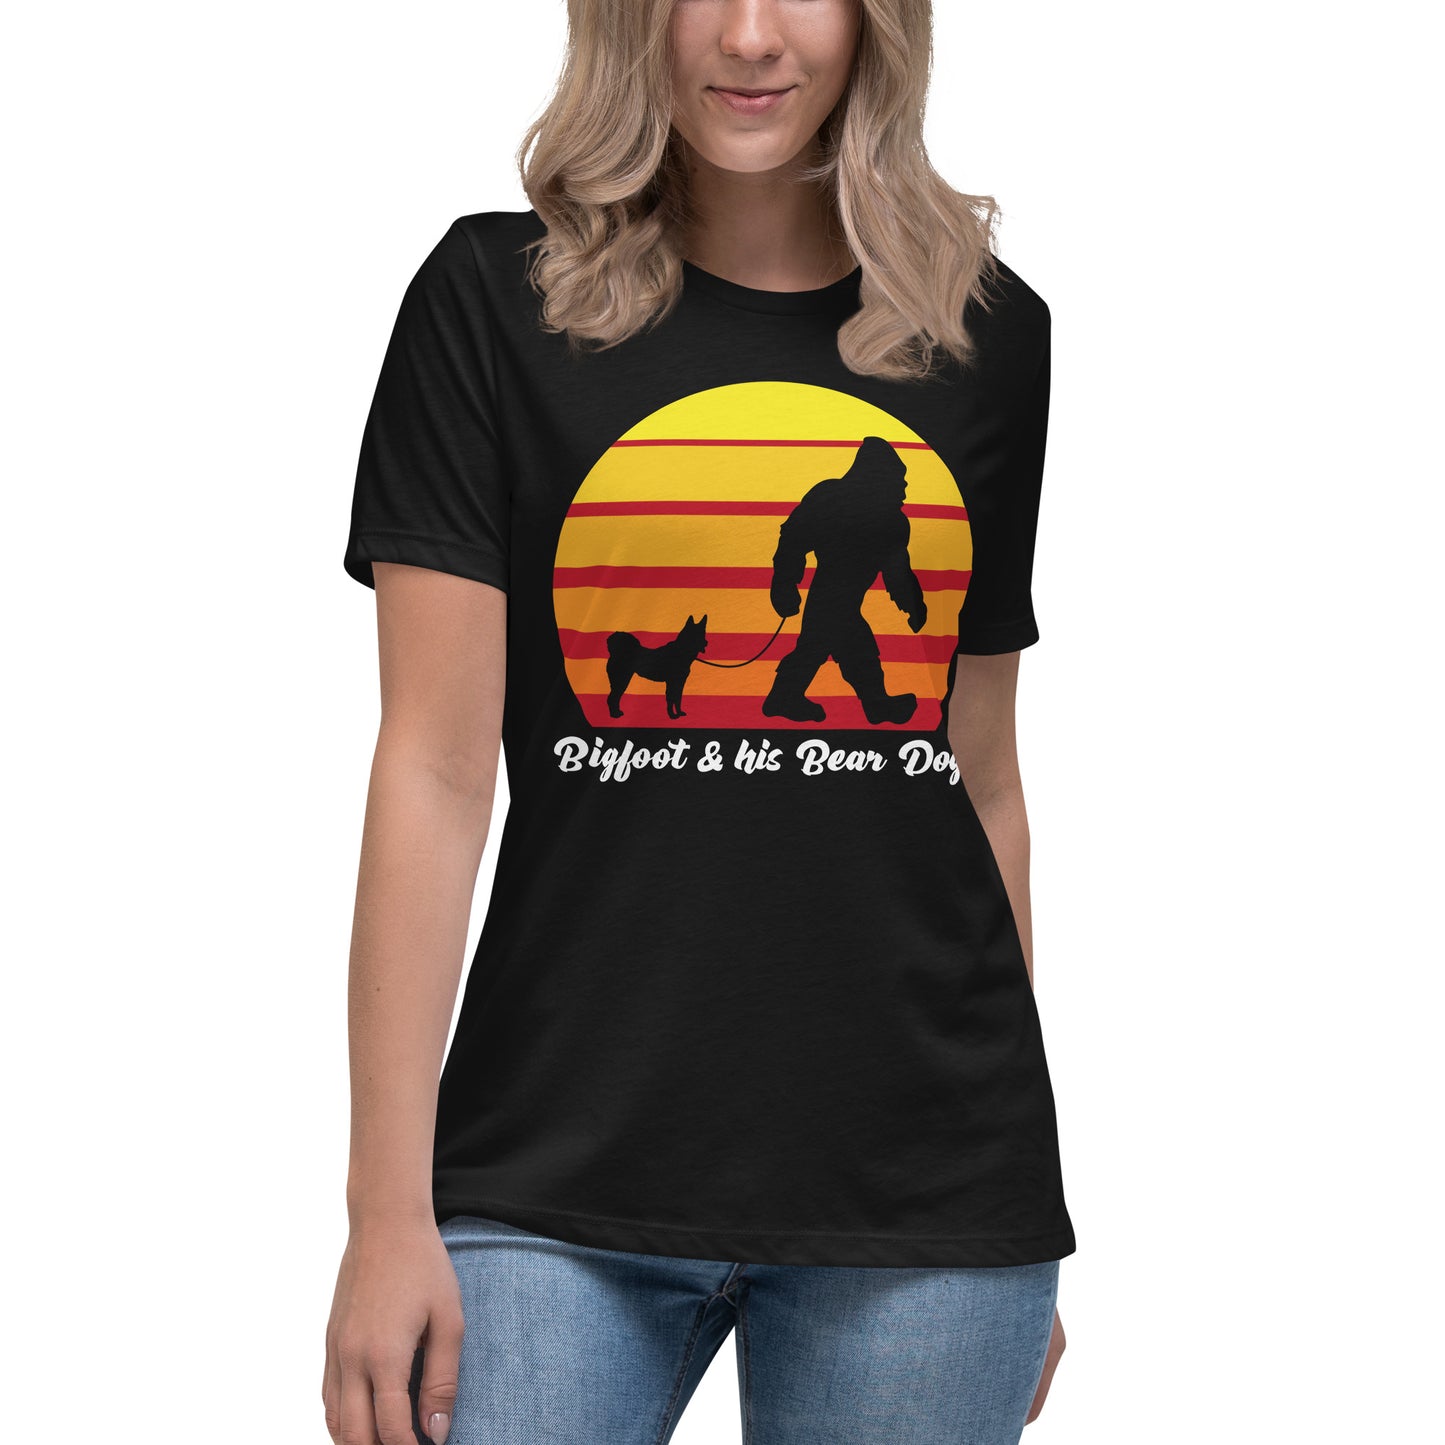 Bigfoot and his Karelian Bear Dog women’s black t-shirt by Dog Artistry.